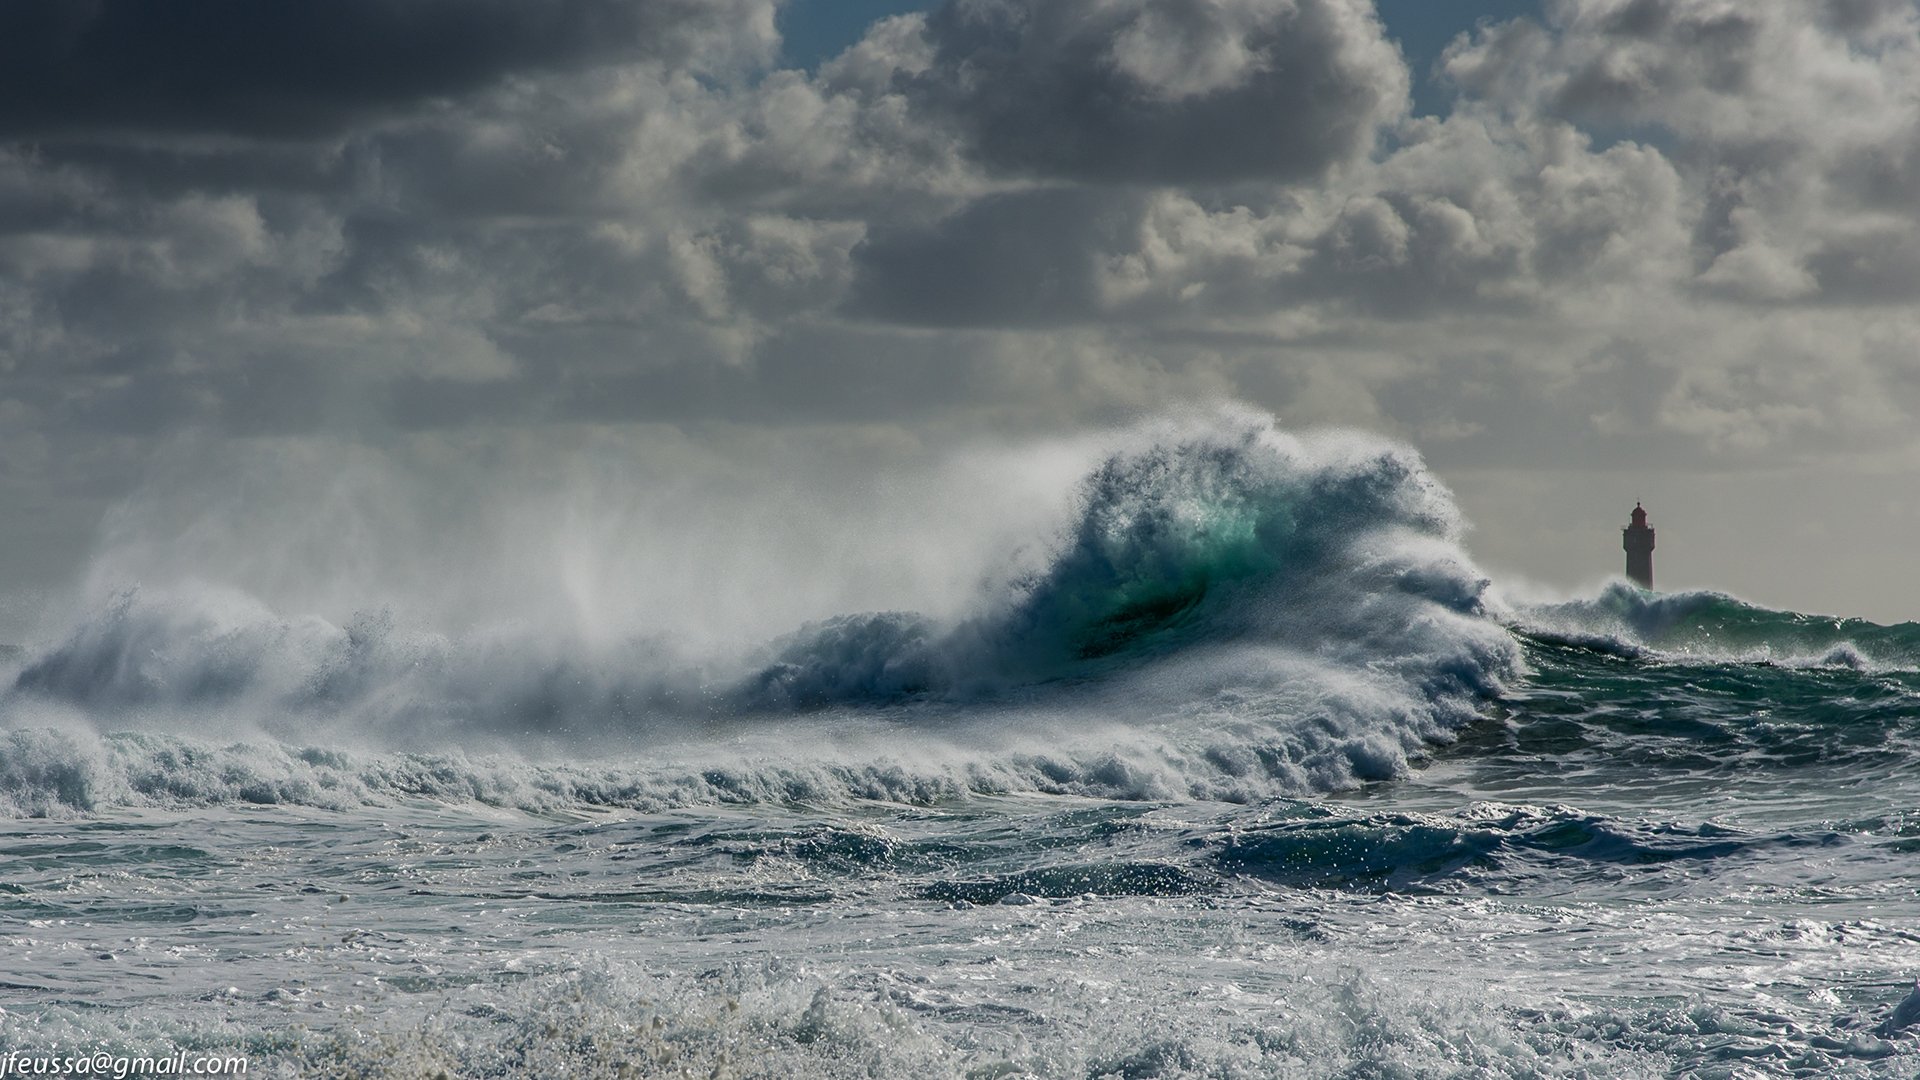 Ocean Waves In Storm Hd Wallpaper Background Image 1920x1080